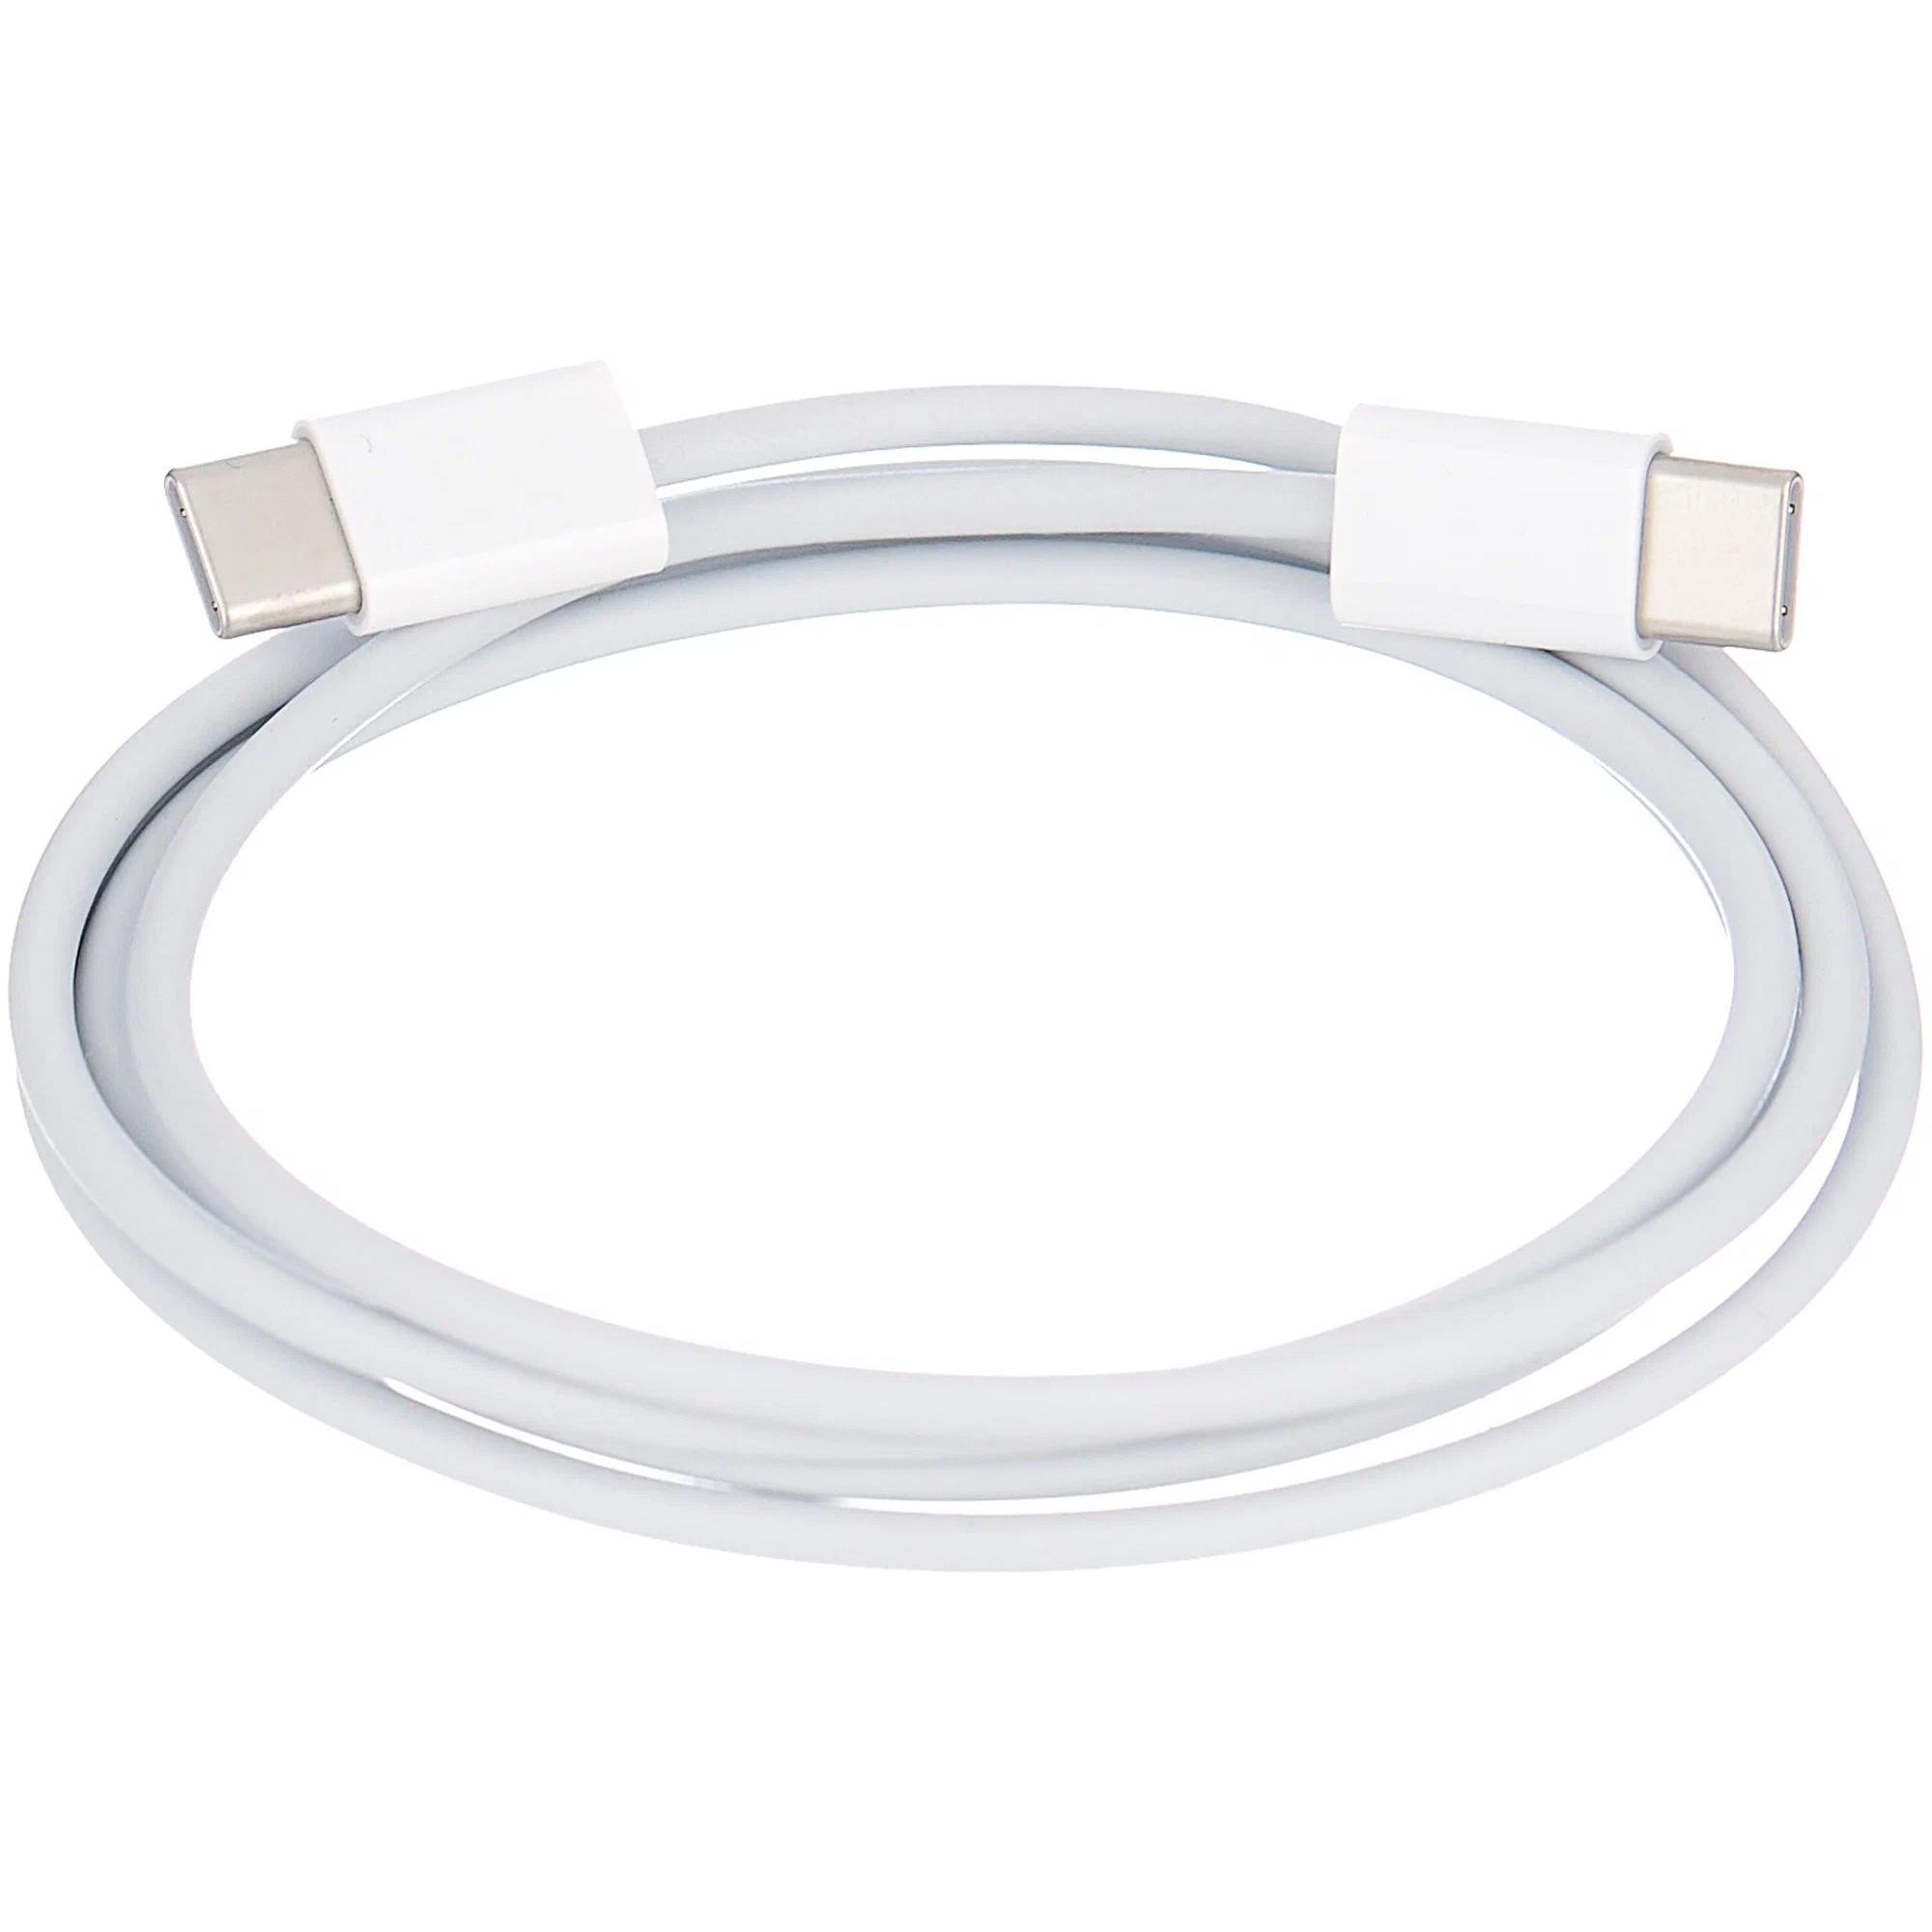 Кабель Apple USB-C Charge Cable (1m) MM093ZM/A комплект 5 штук кабель apple usb c charge cable 2 m бел mll82zm a